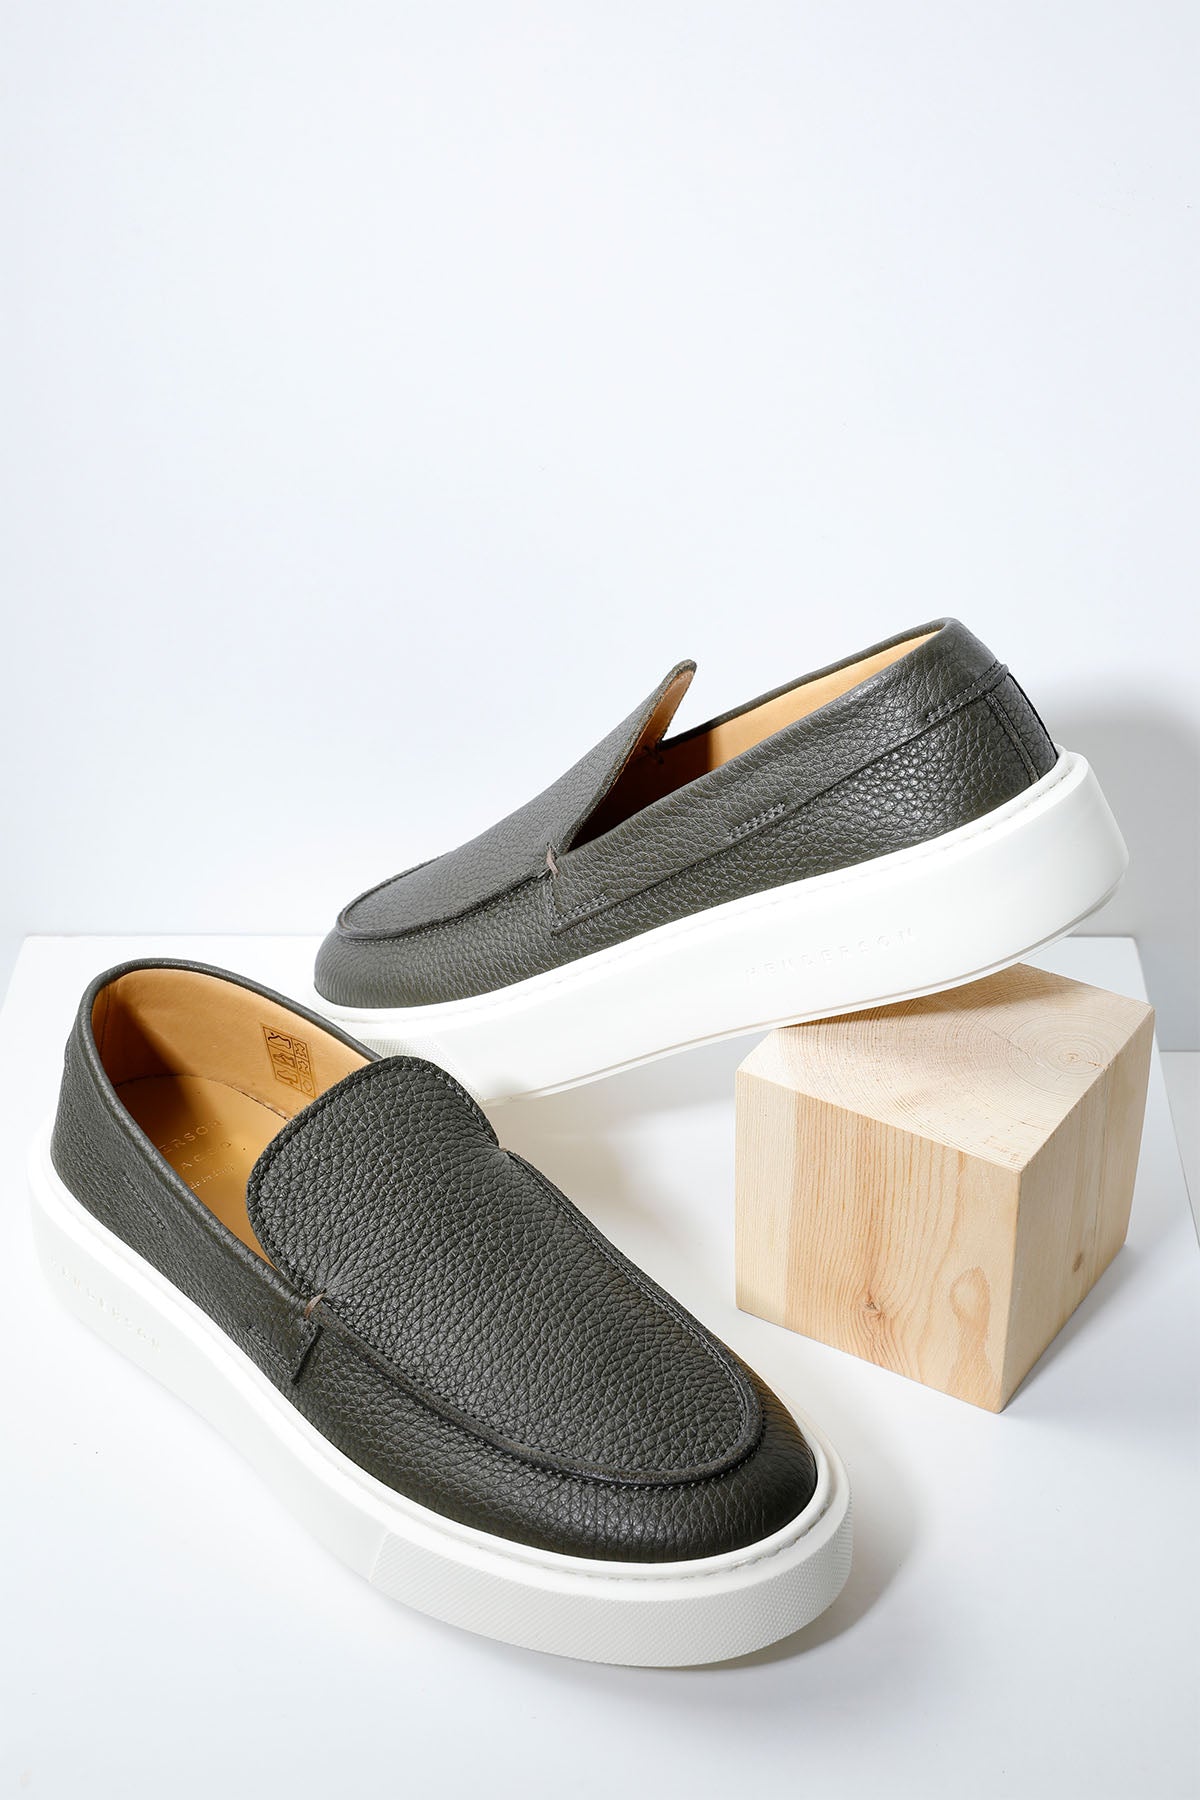 Henderson Amos Extralight Deri Loafer Ayakkabı-Libas Trendy Fashion Store